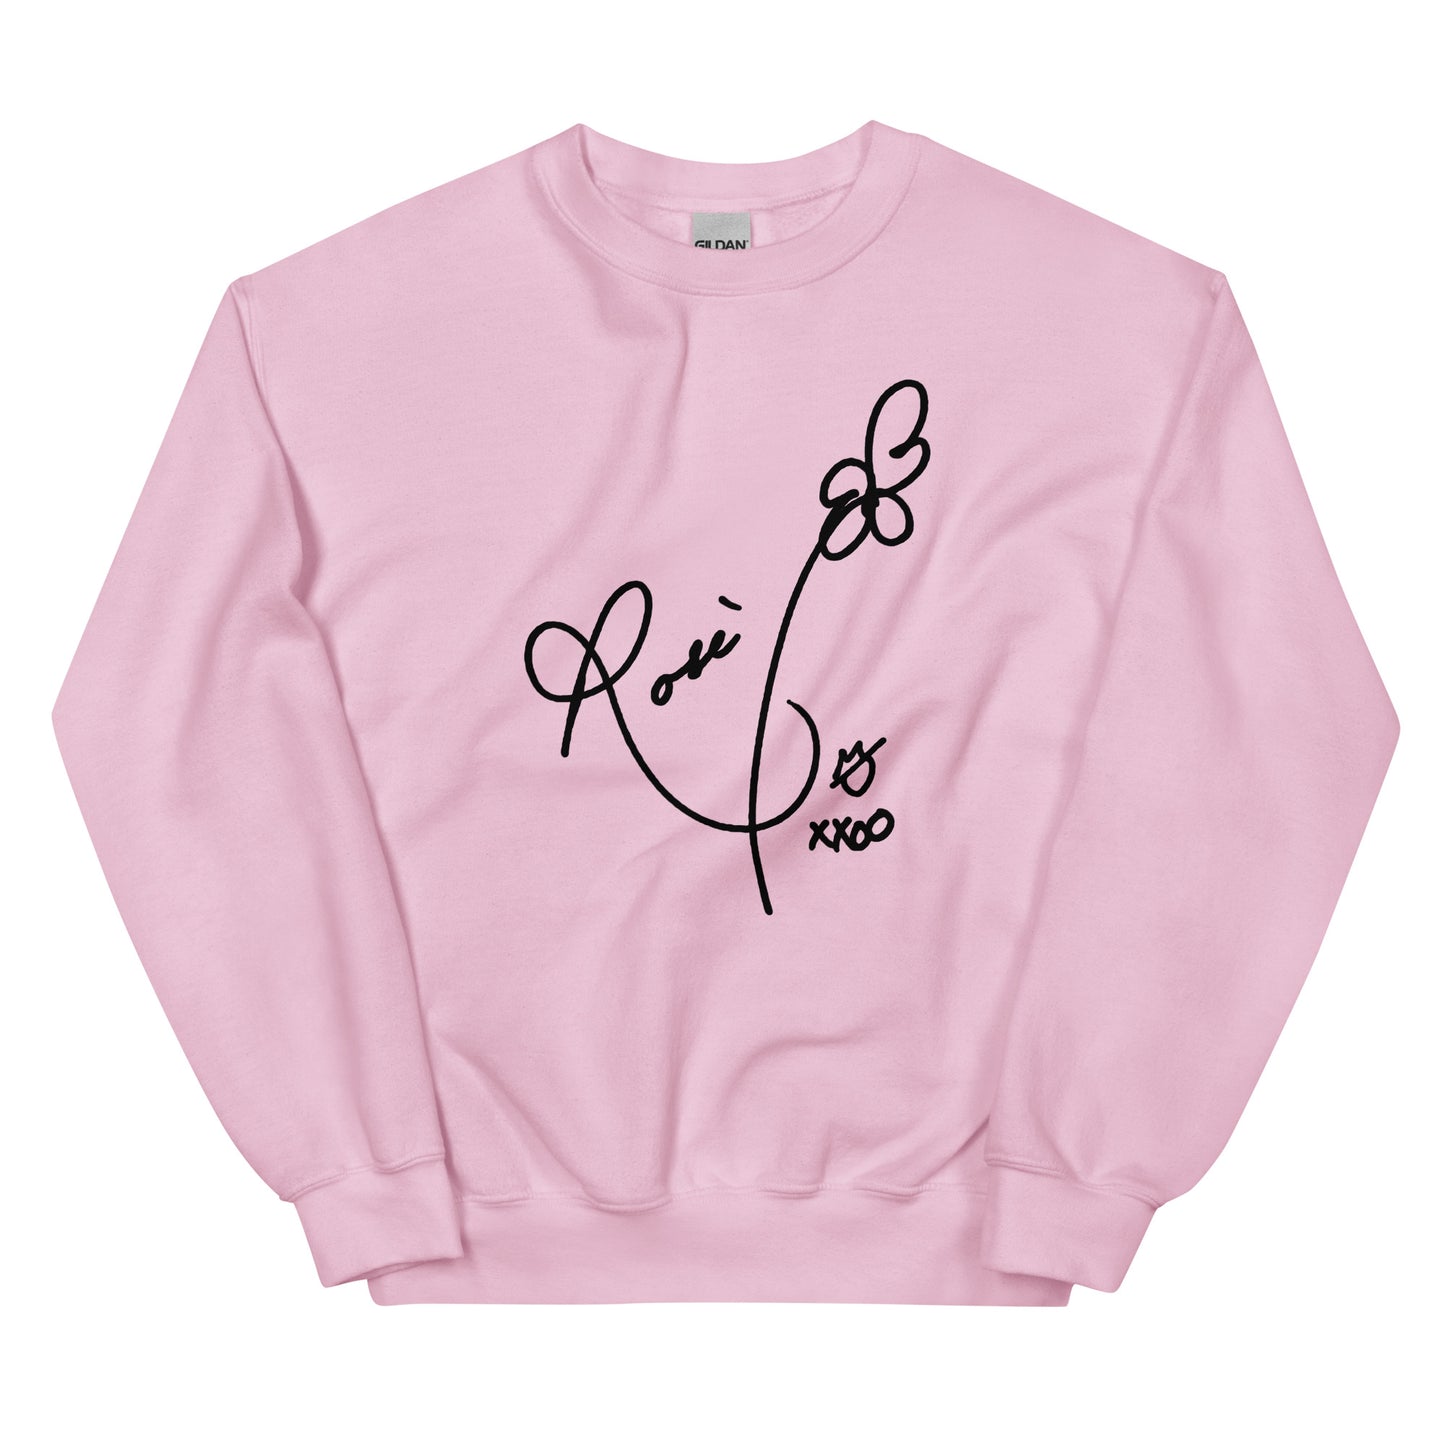 BLACKPINK Rosé, Roseanne Park Signature Unisex Sweatshirt